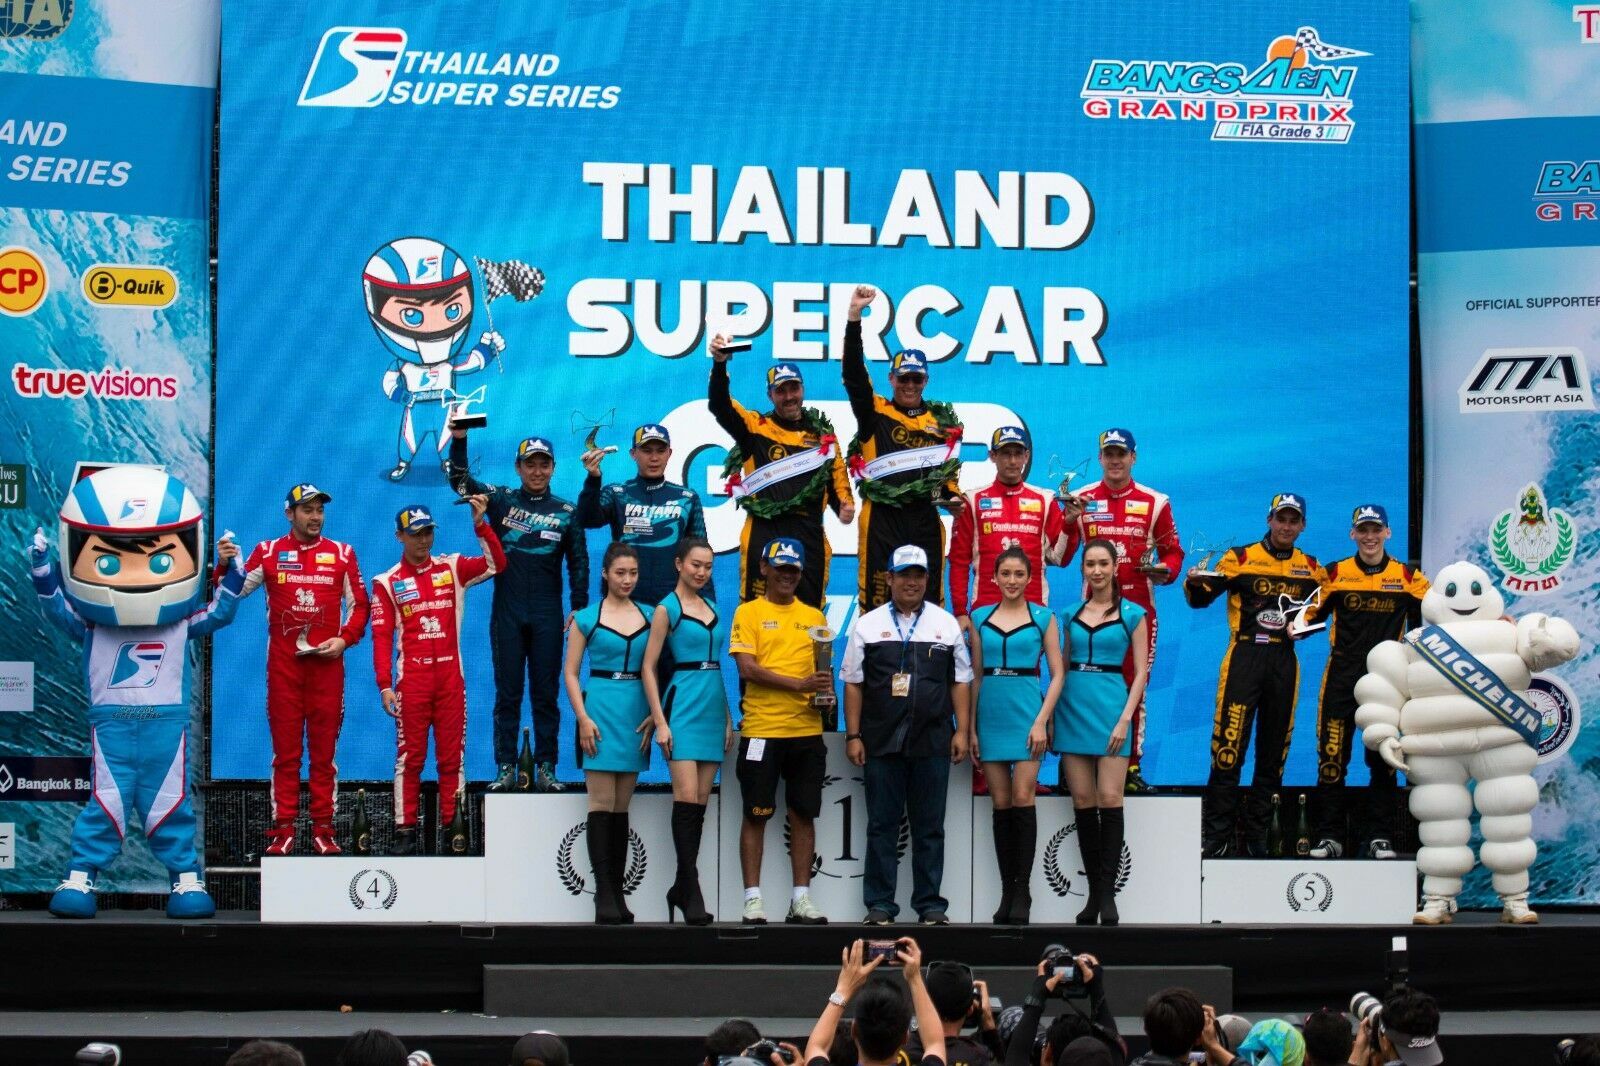 Thailand Super Series 2019